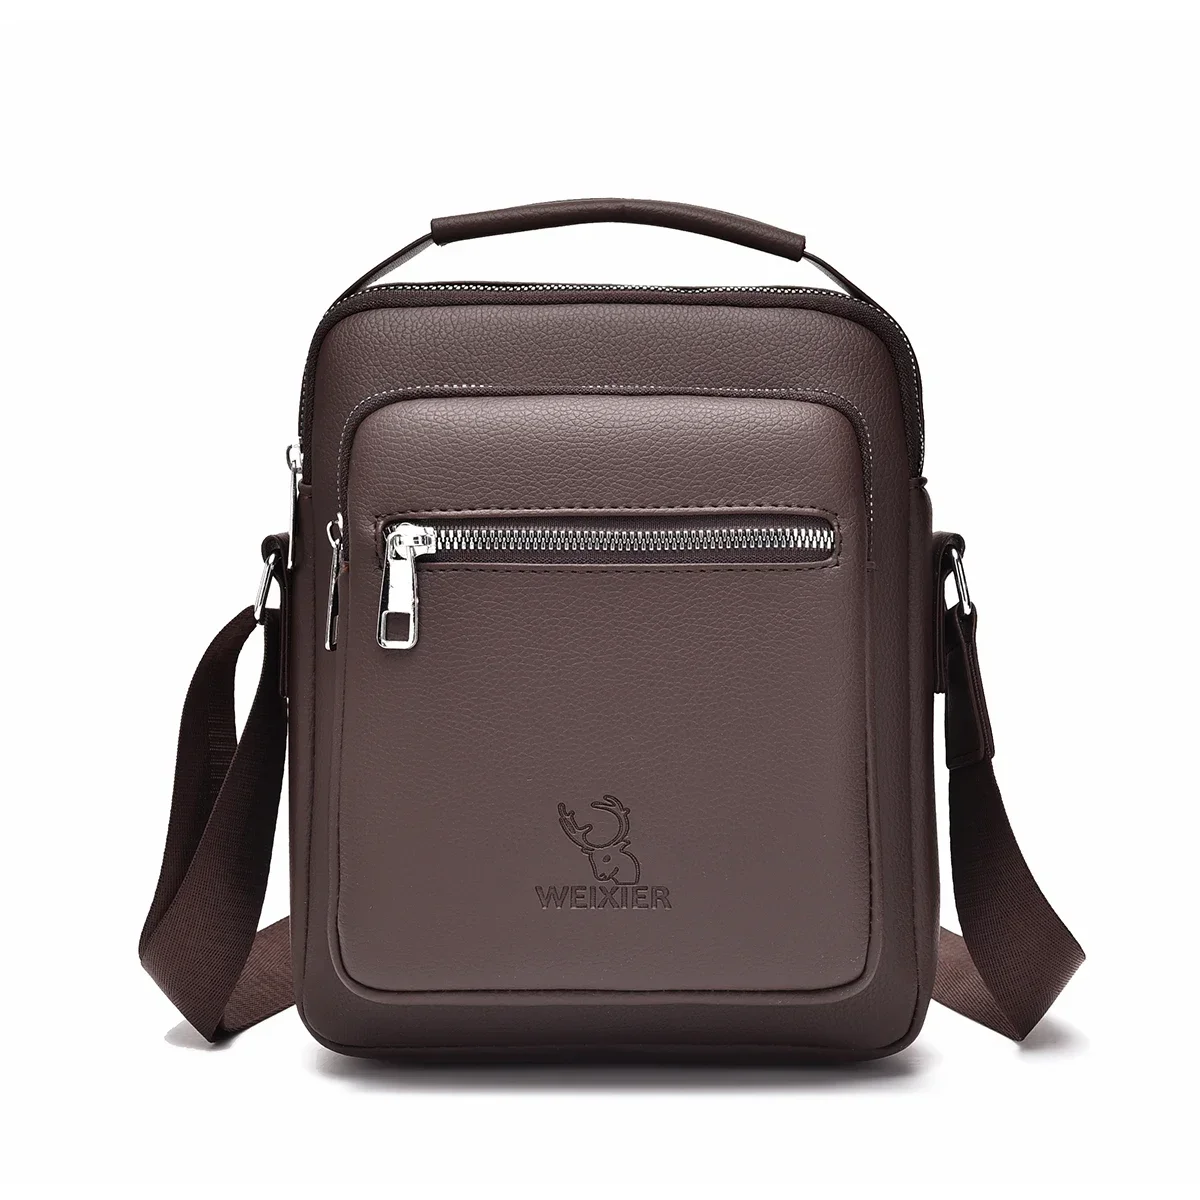 

Men's Bag Handbag New Shoulder Bag husband Stylish Large Capacity Crossbody bag Luxury Designer Messenger sac for Short Trips 가방